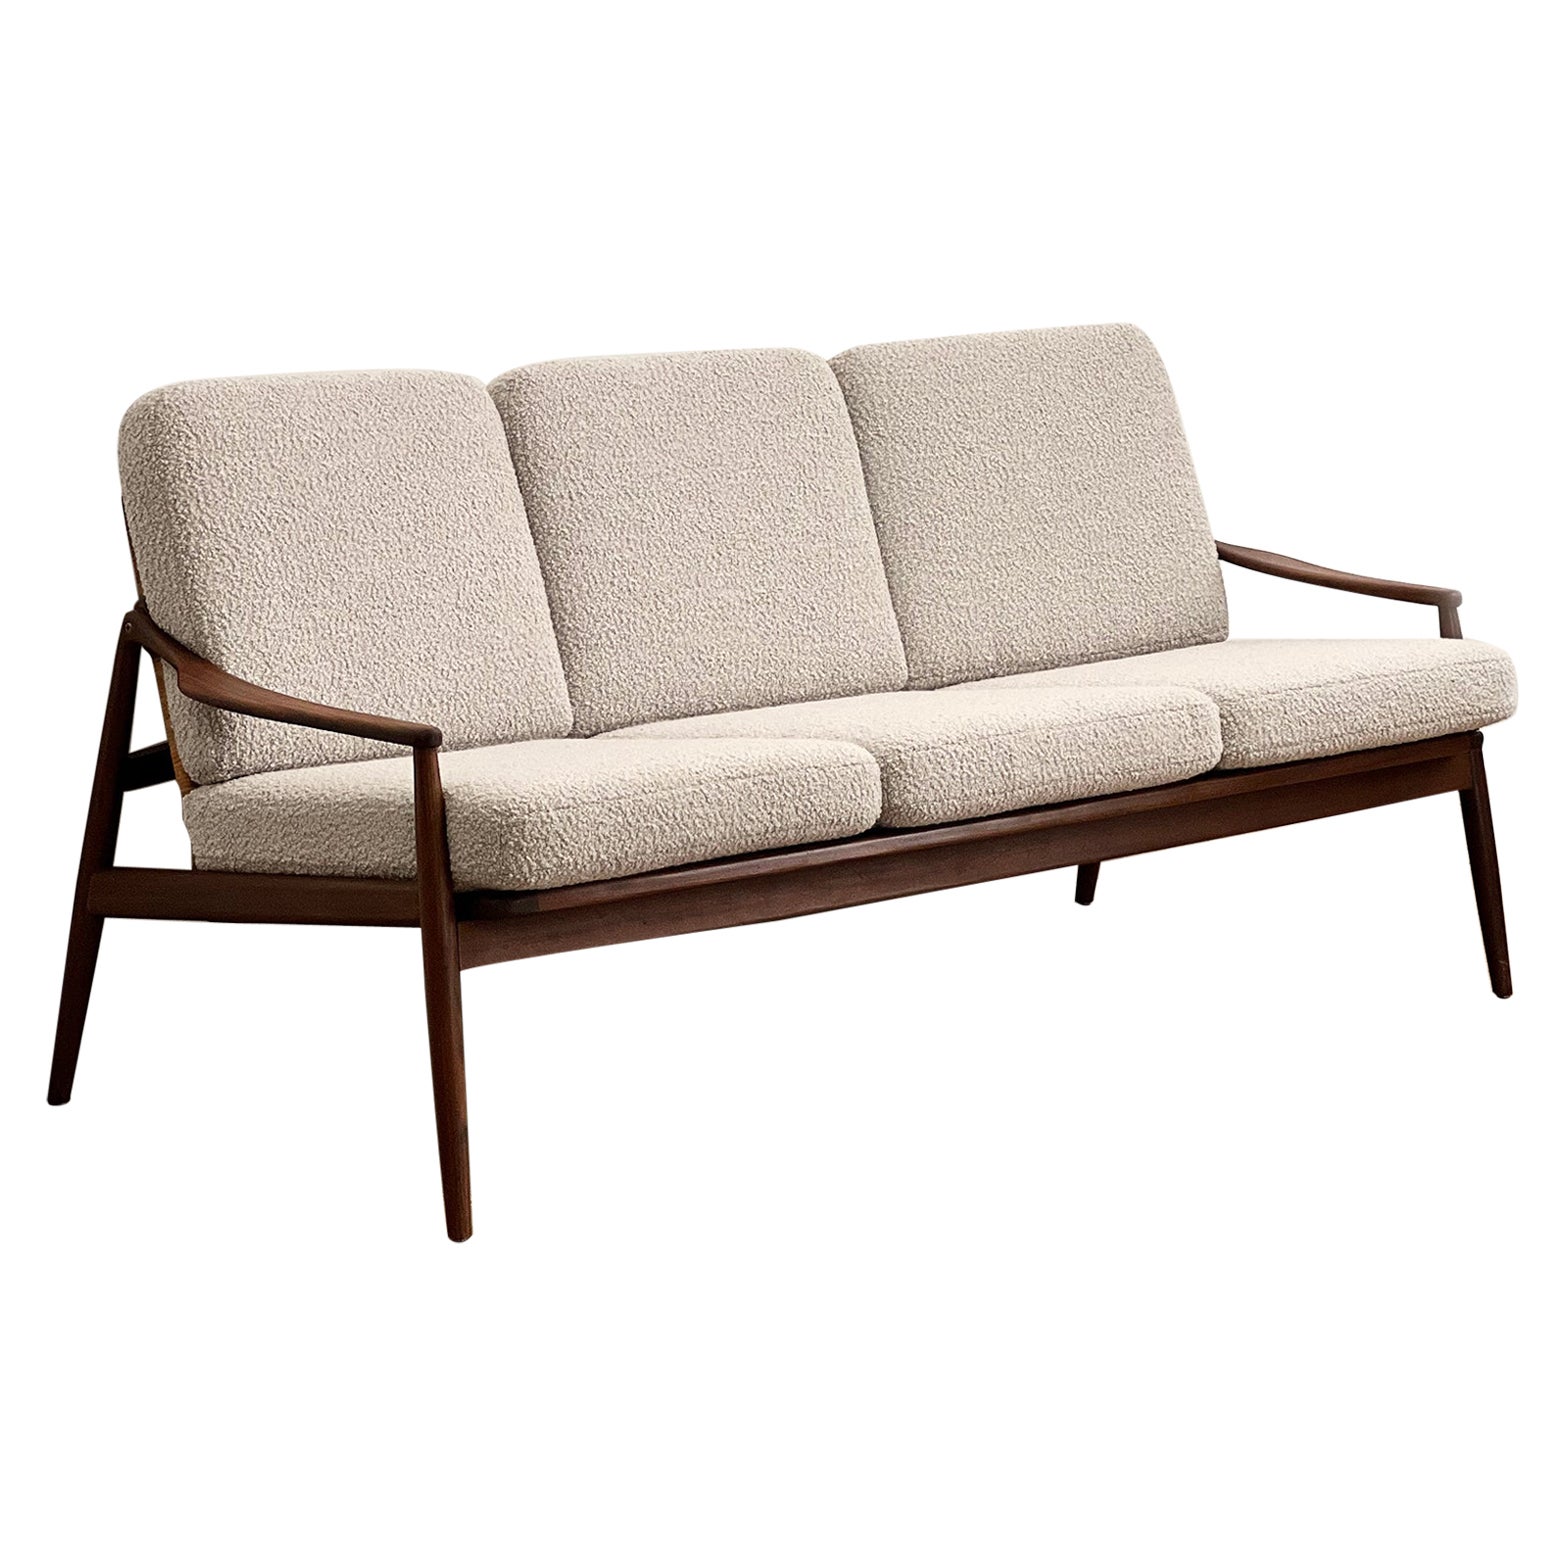 Mid-Century Teak Sofa or Couch by Hartmut Lohmeyer, German Design, 1950s